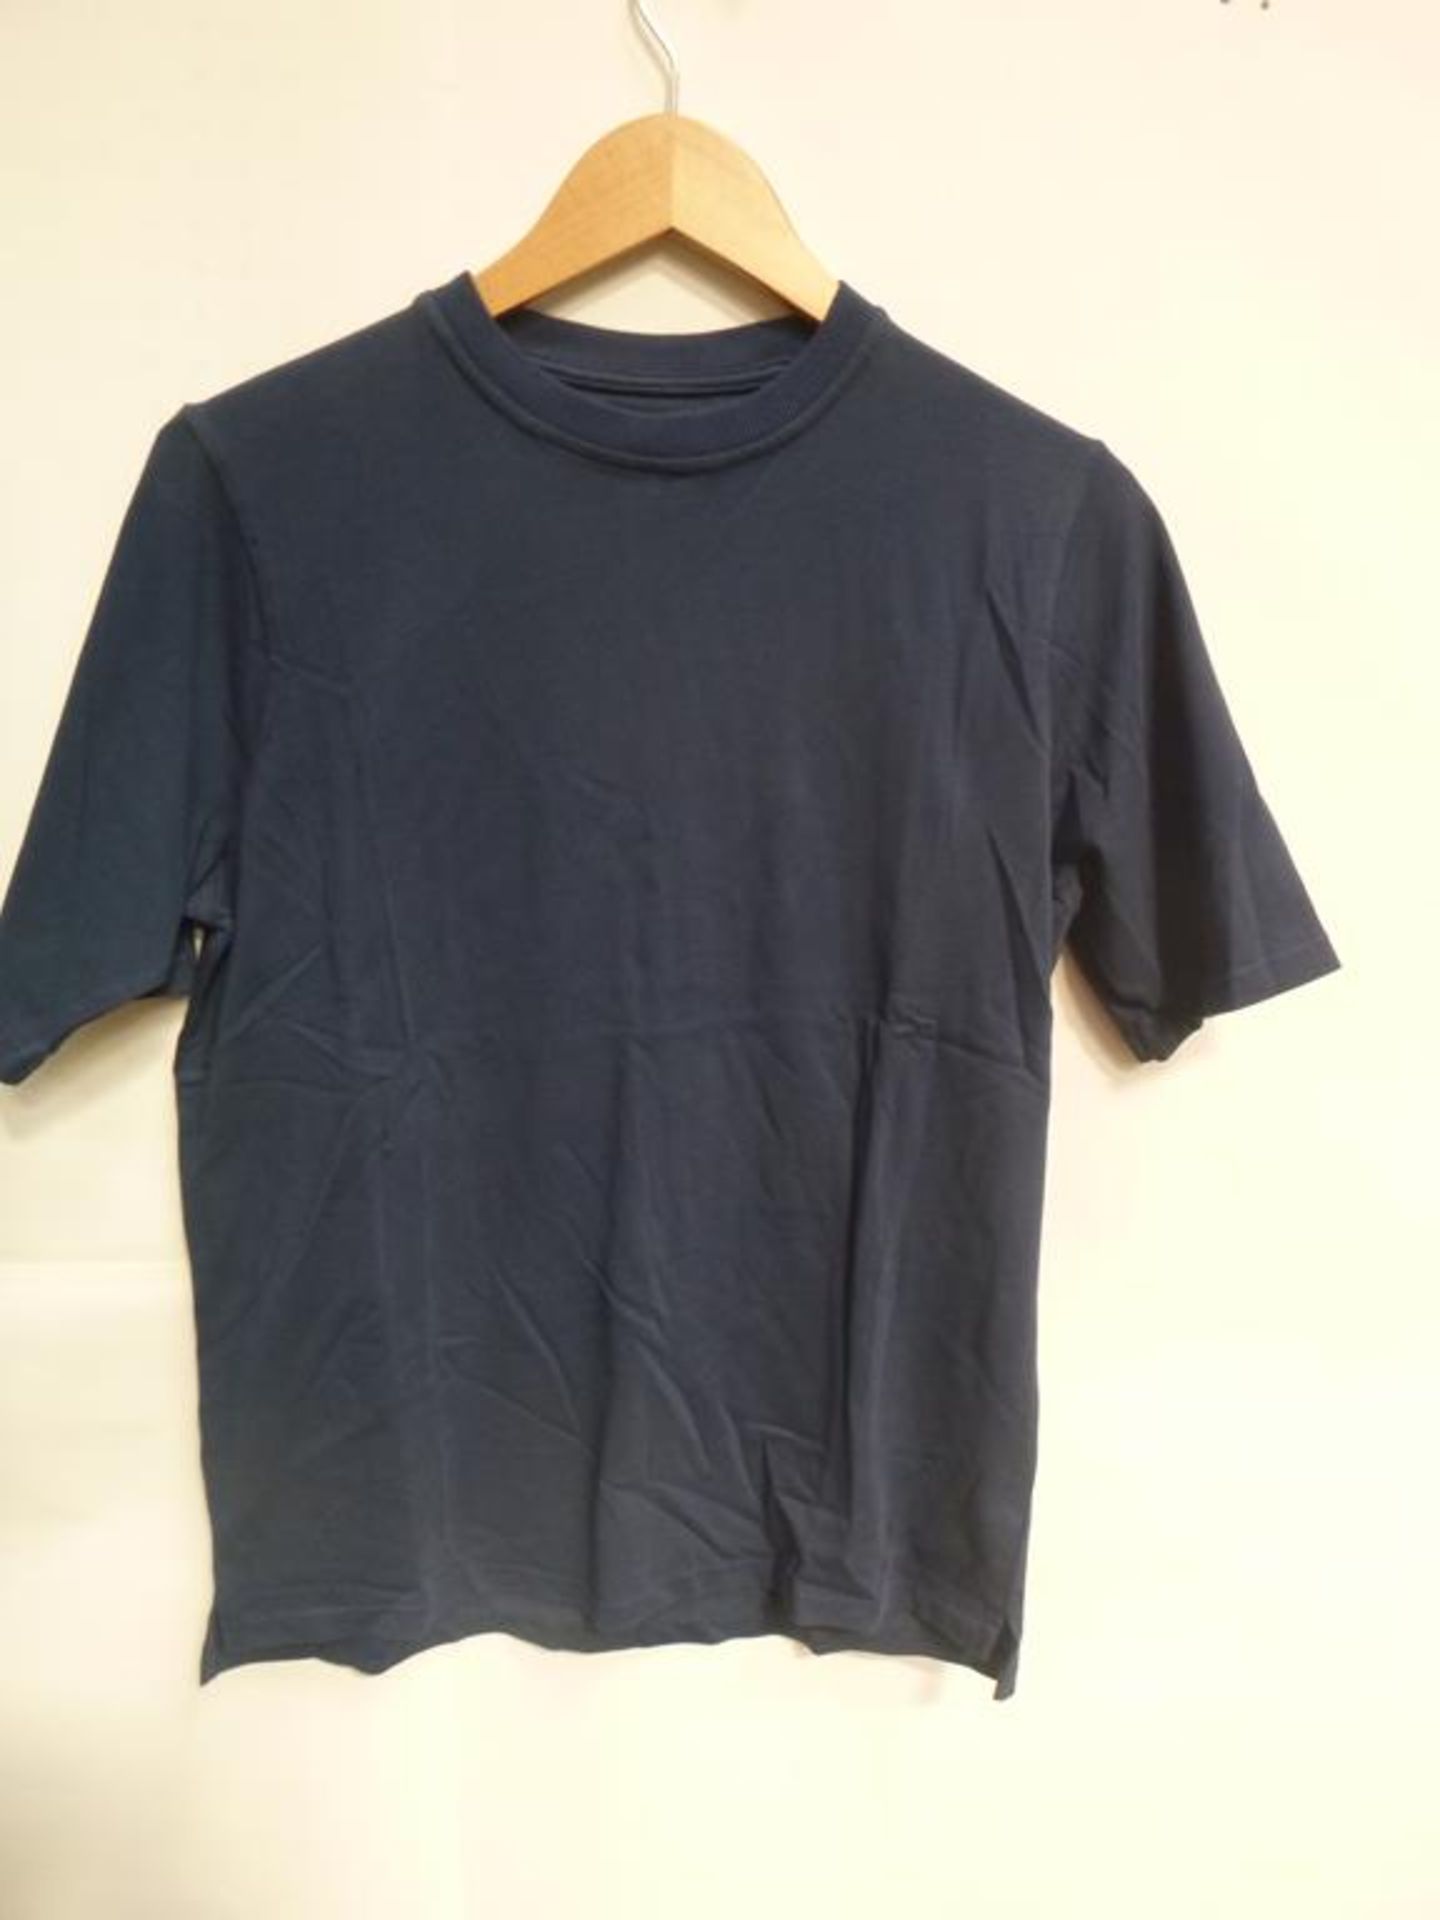 Three Navy Short Sleeve T-Shirts (2 XS, S), Two Navy Long Sleeve T-Shirts (XS, M), Celia Crew Linen - Image 4 of 7